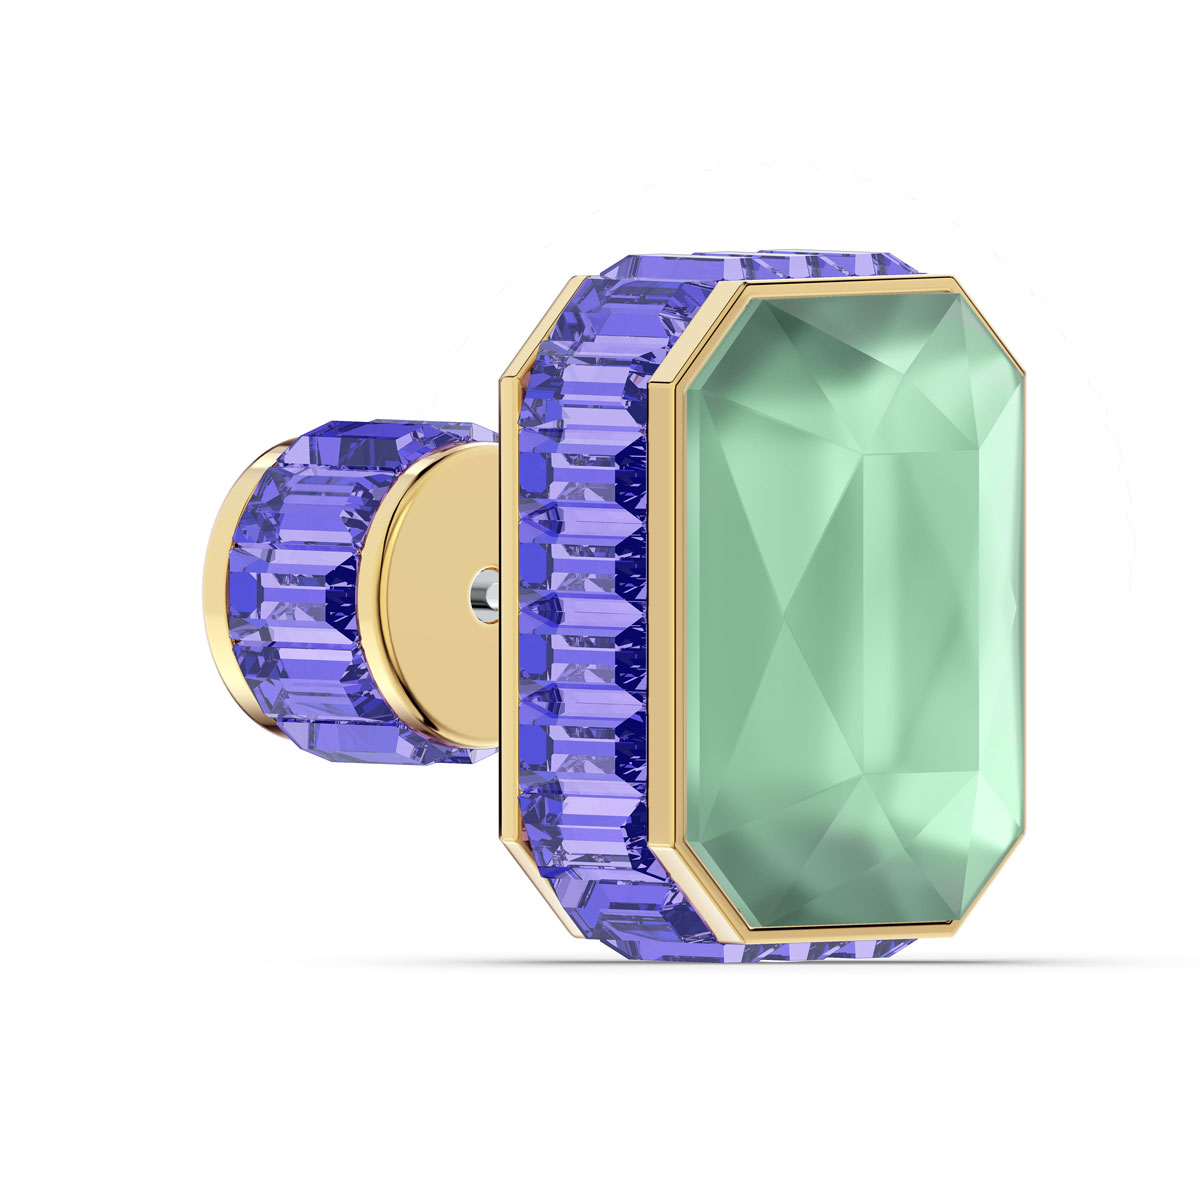 Swarovski Orbita Earring Single, Octagon Cut Crystal, Multicolored, Gold-Tone Plated